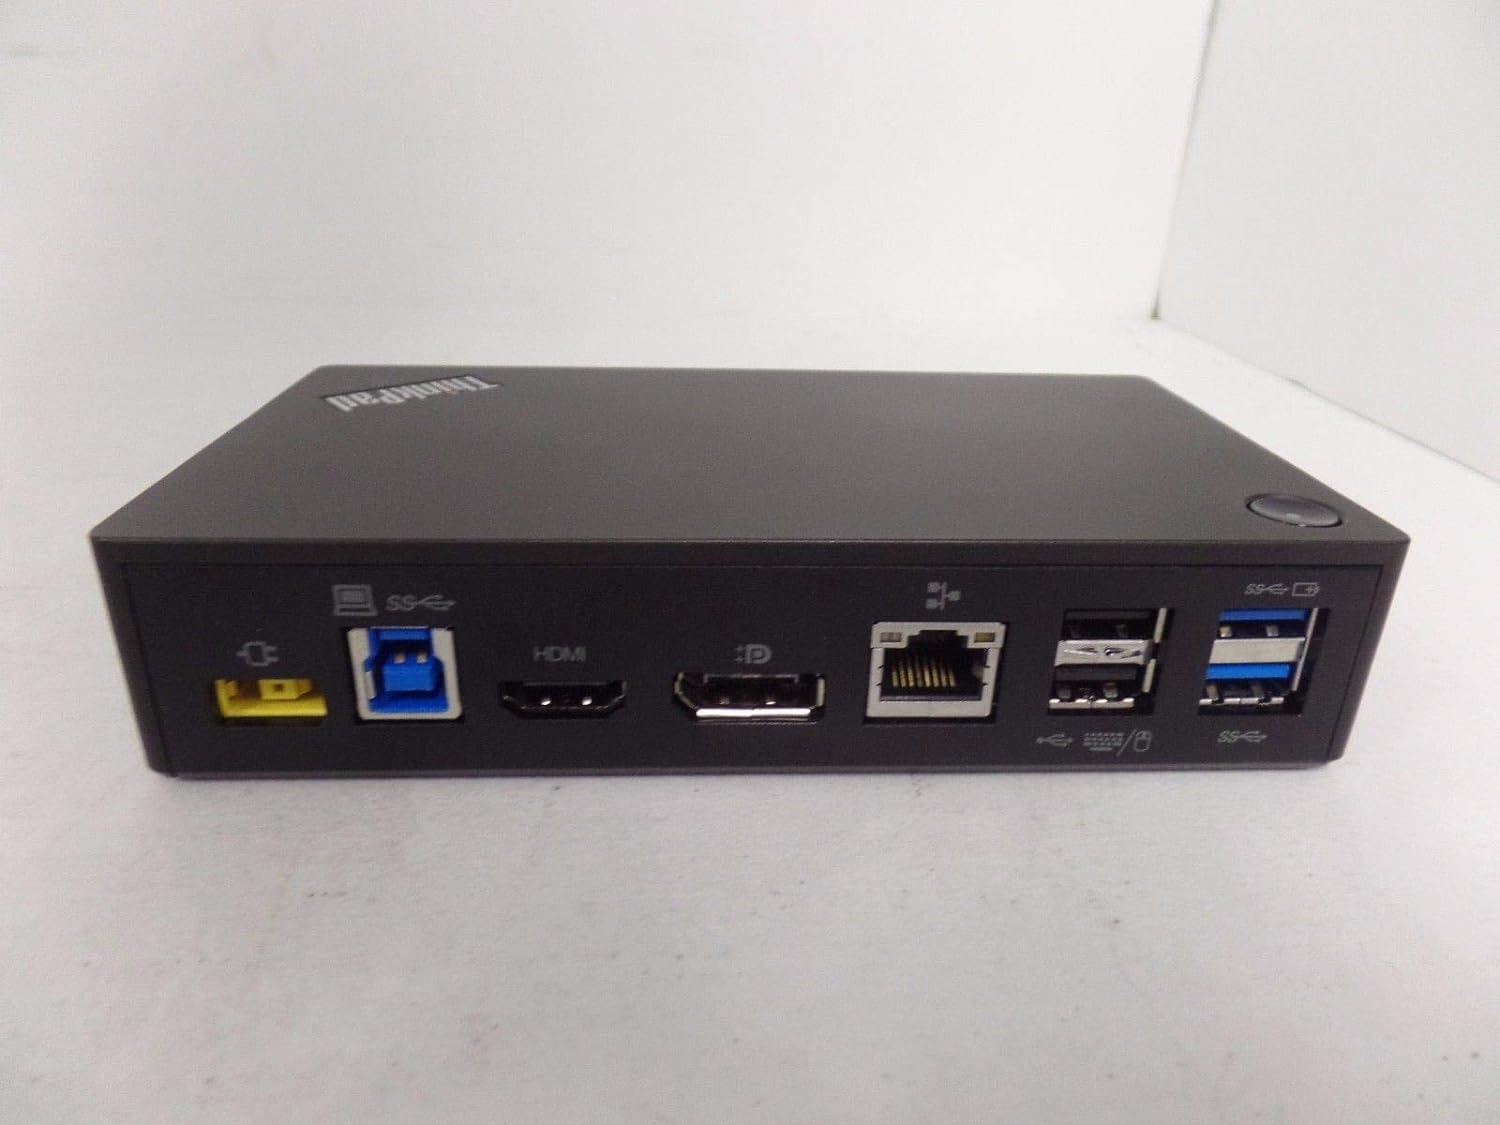 Lenovo Thinkpad Ultra Dock 40A80045US USB 3.0, USB 2.0, HDMI, Display Port